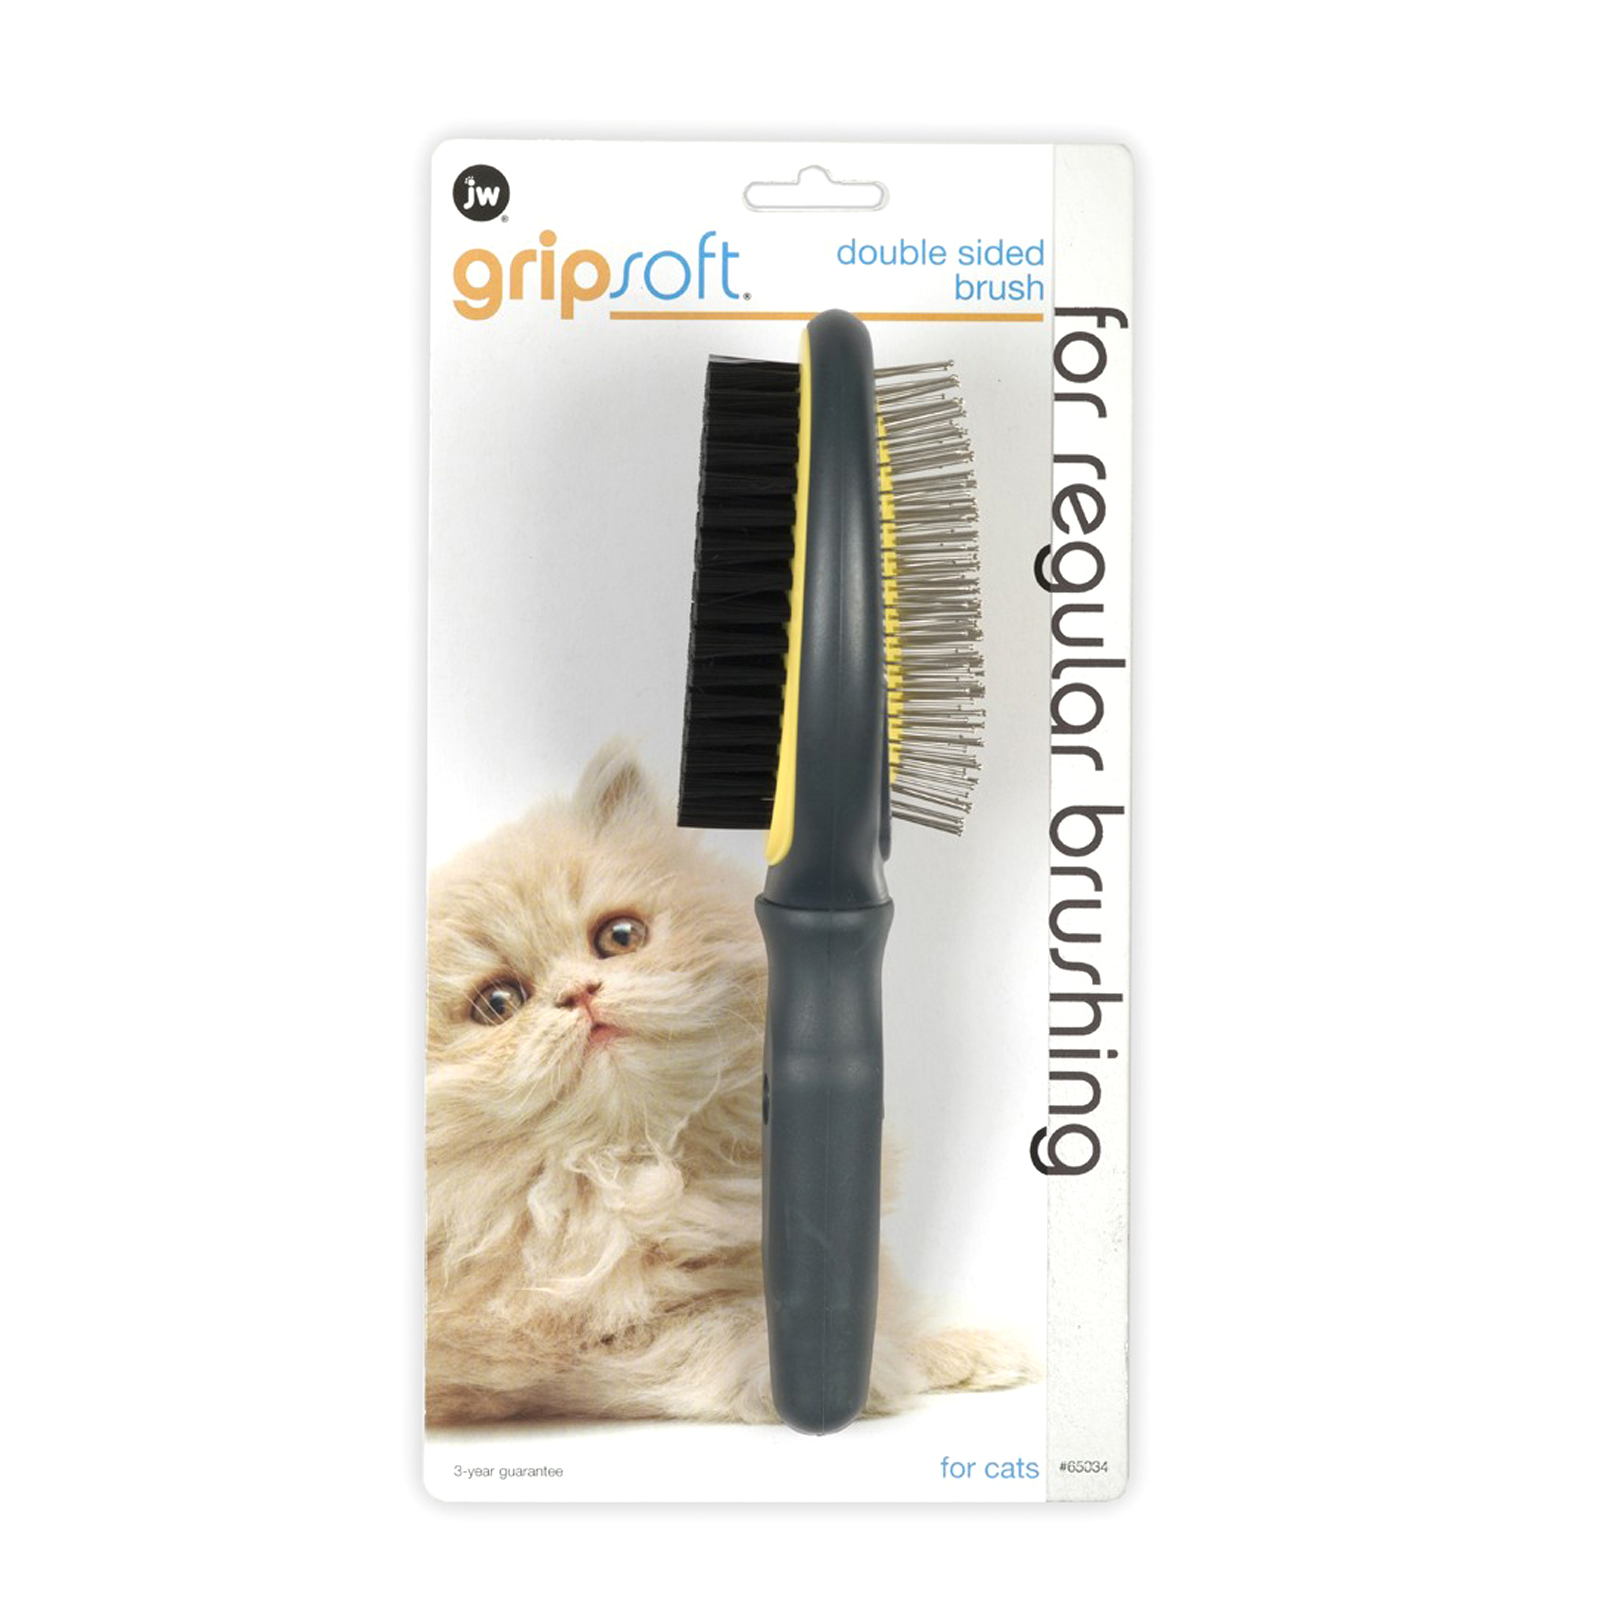 Jw Pet Company Gripsoft Double Sided Brush Cat